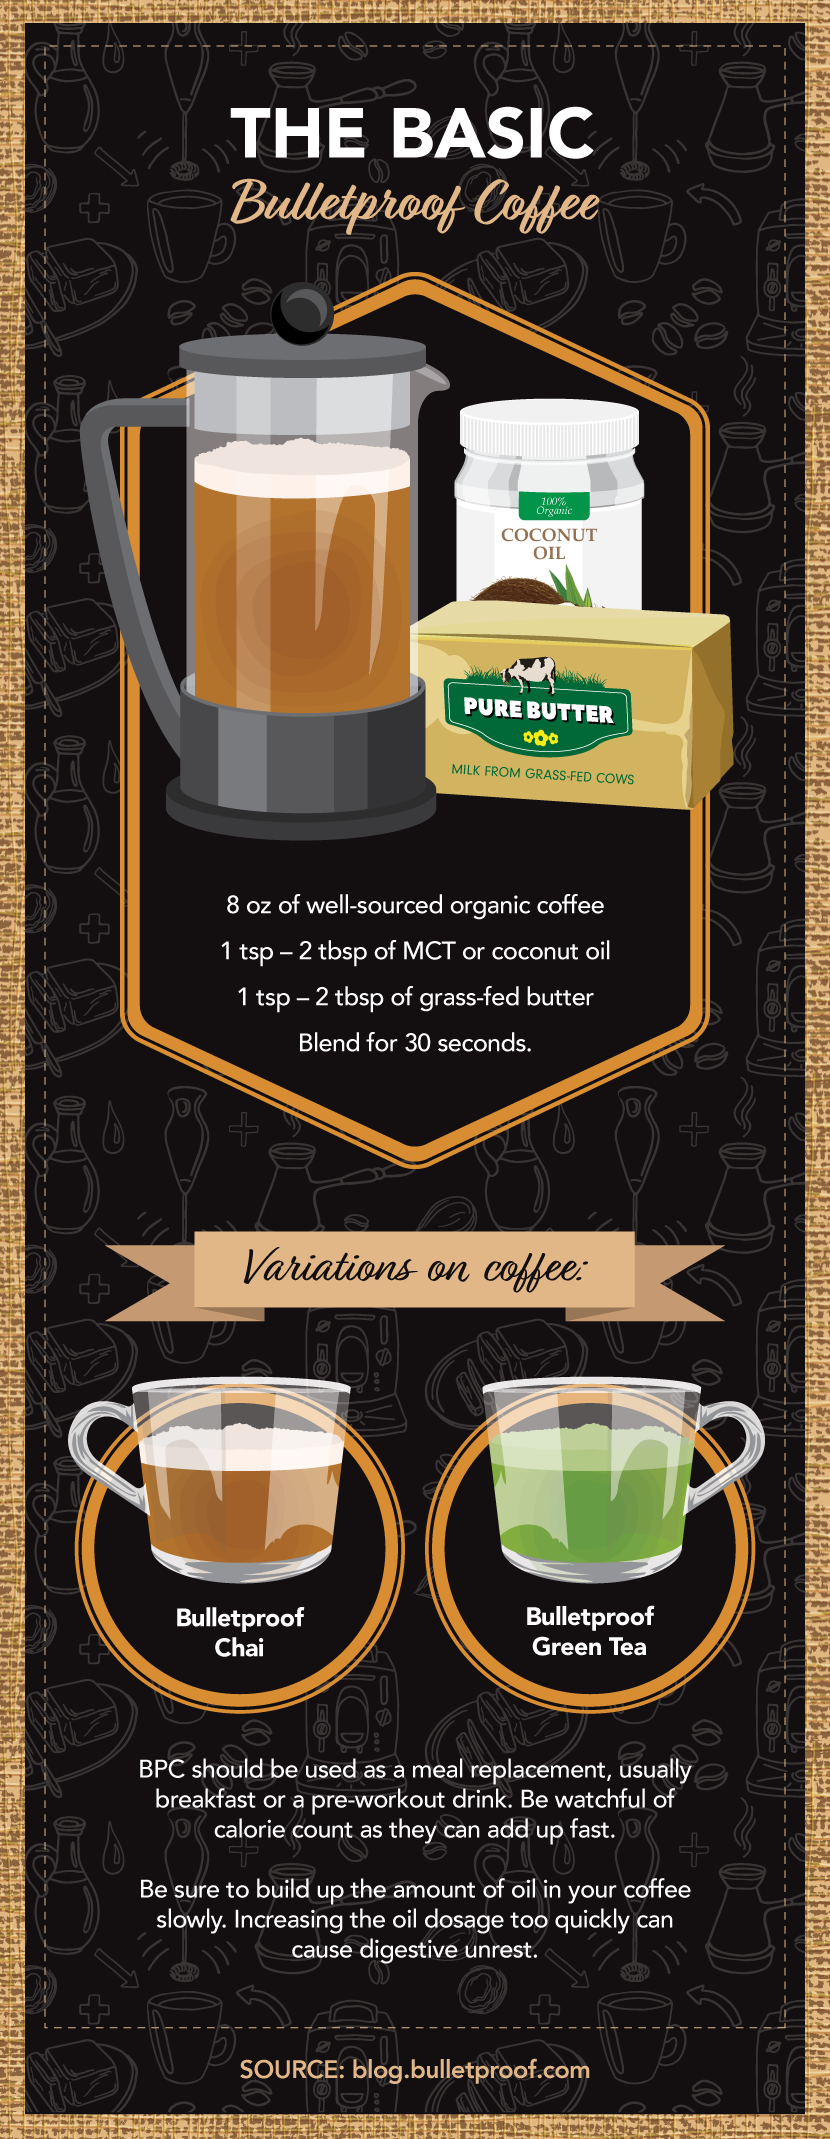 The Basic - Bulletproof Coffee